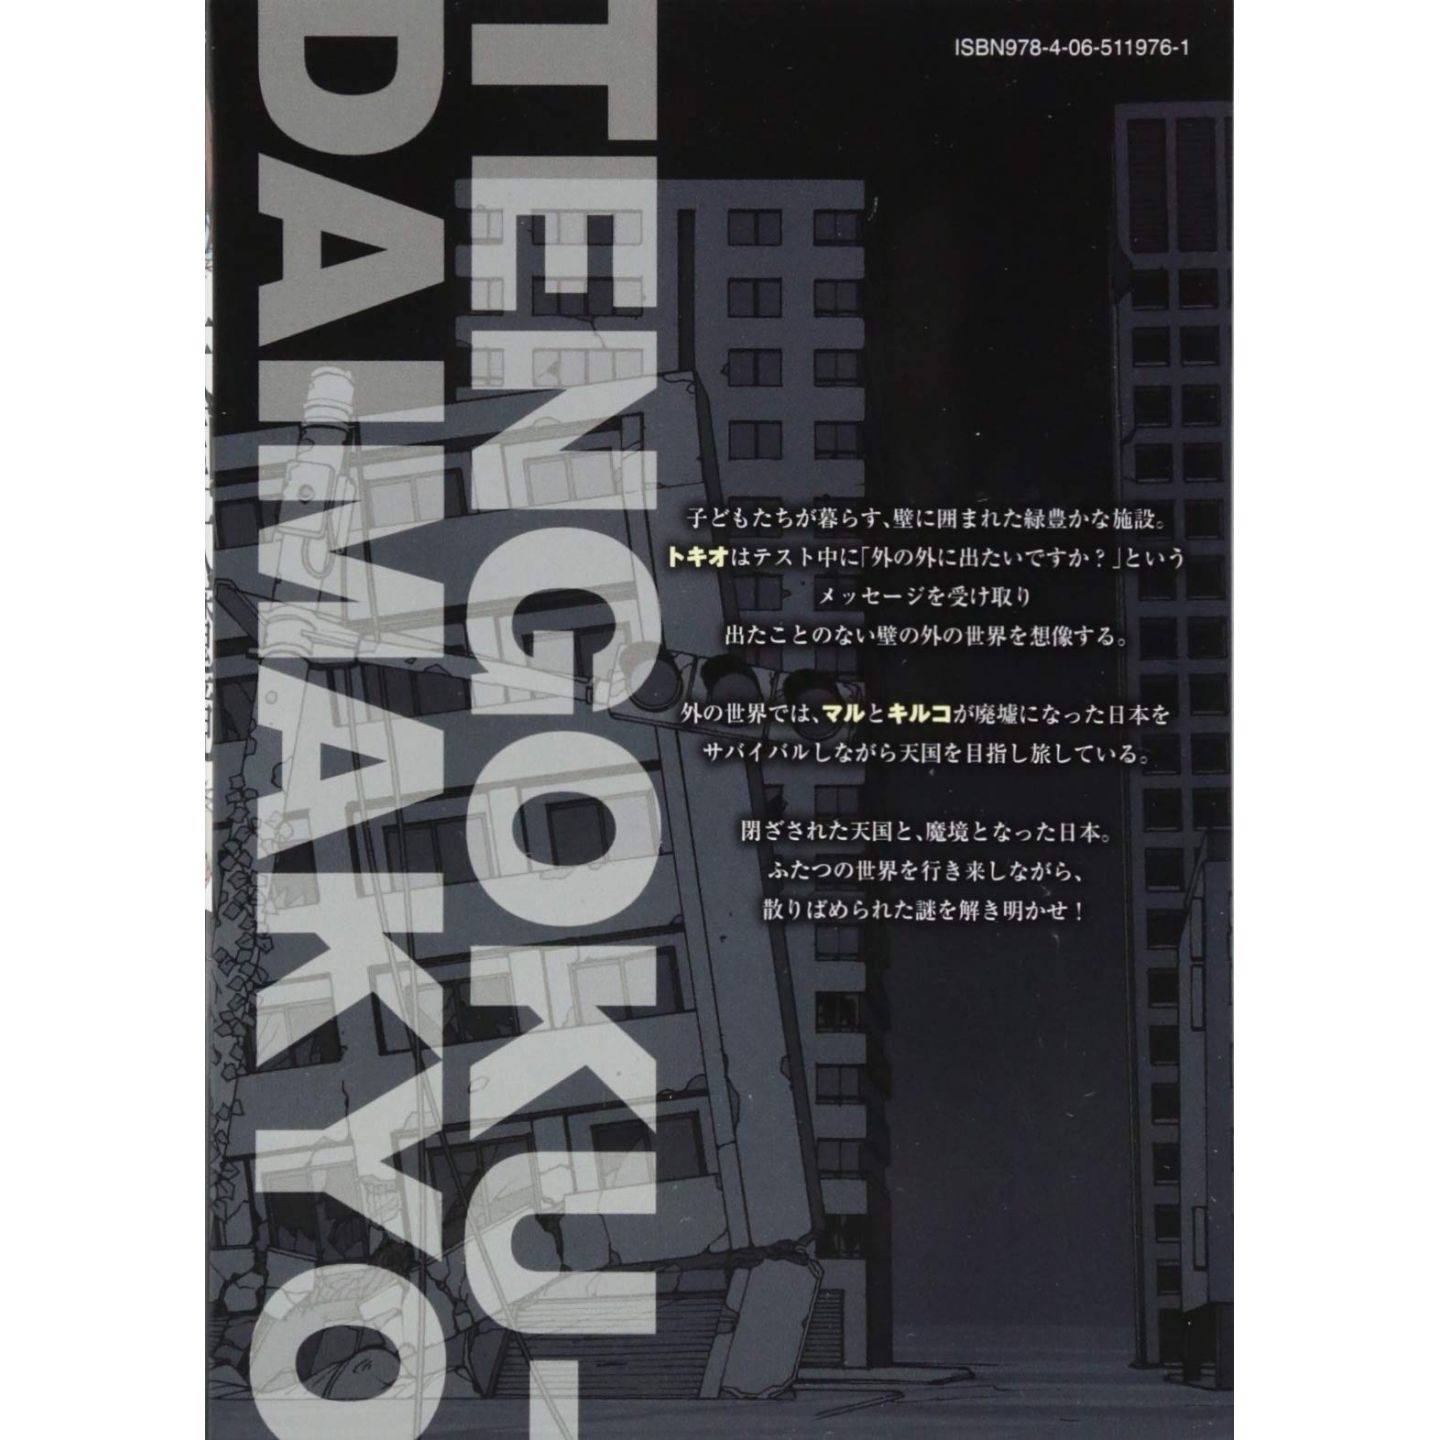 Heavenly Delusion: Heavenly Delusion, Volume 1: Tengoku Daimakyo  (Paperback) 